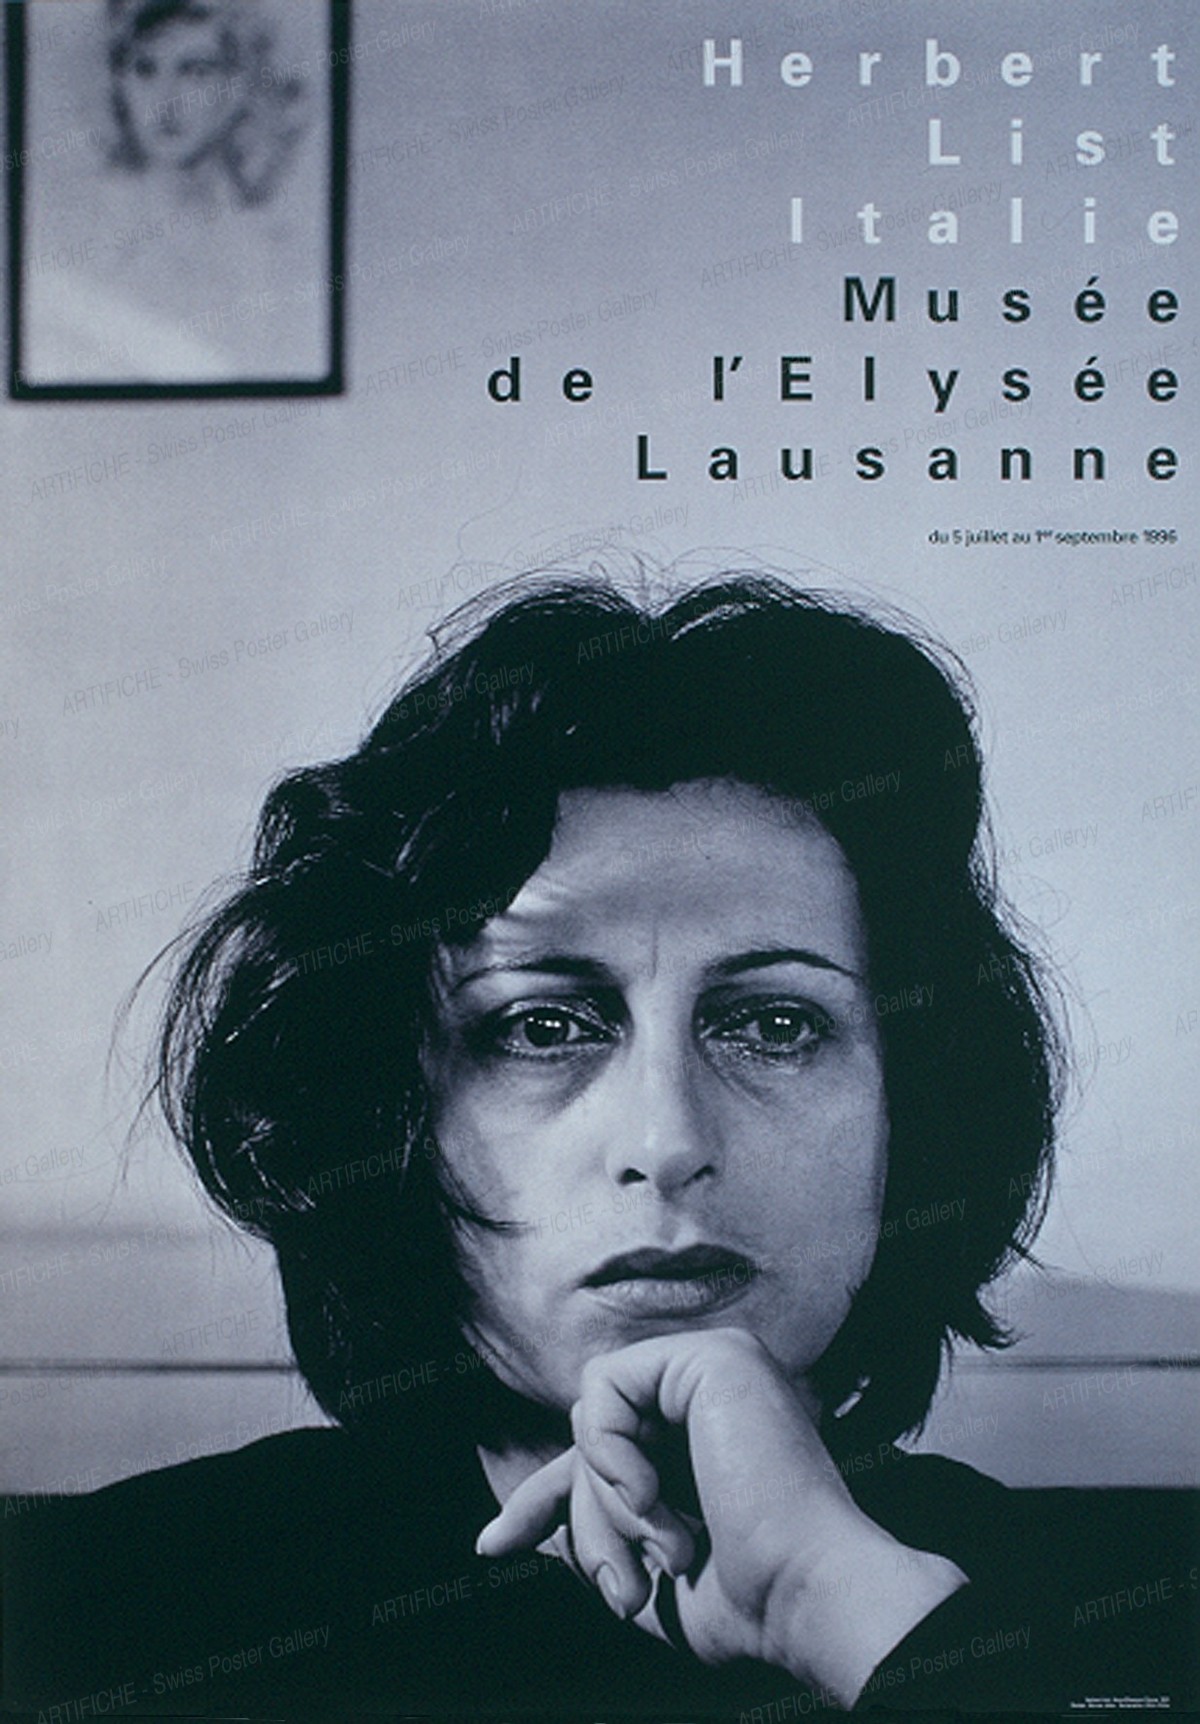 Elysee Museum Lausanne – Photo: Herbert List, Italie “Anna Magnani, Rome 1951”, Werner Jeker